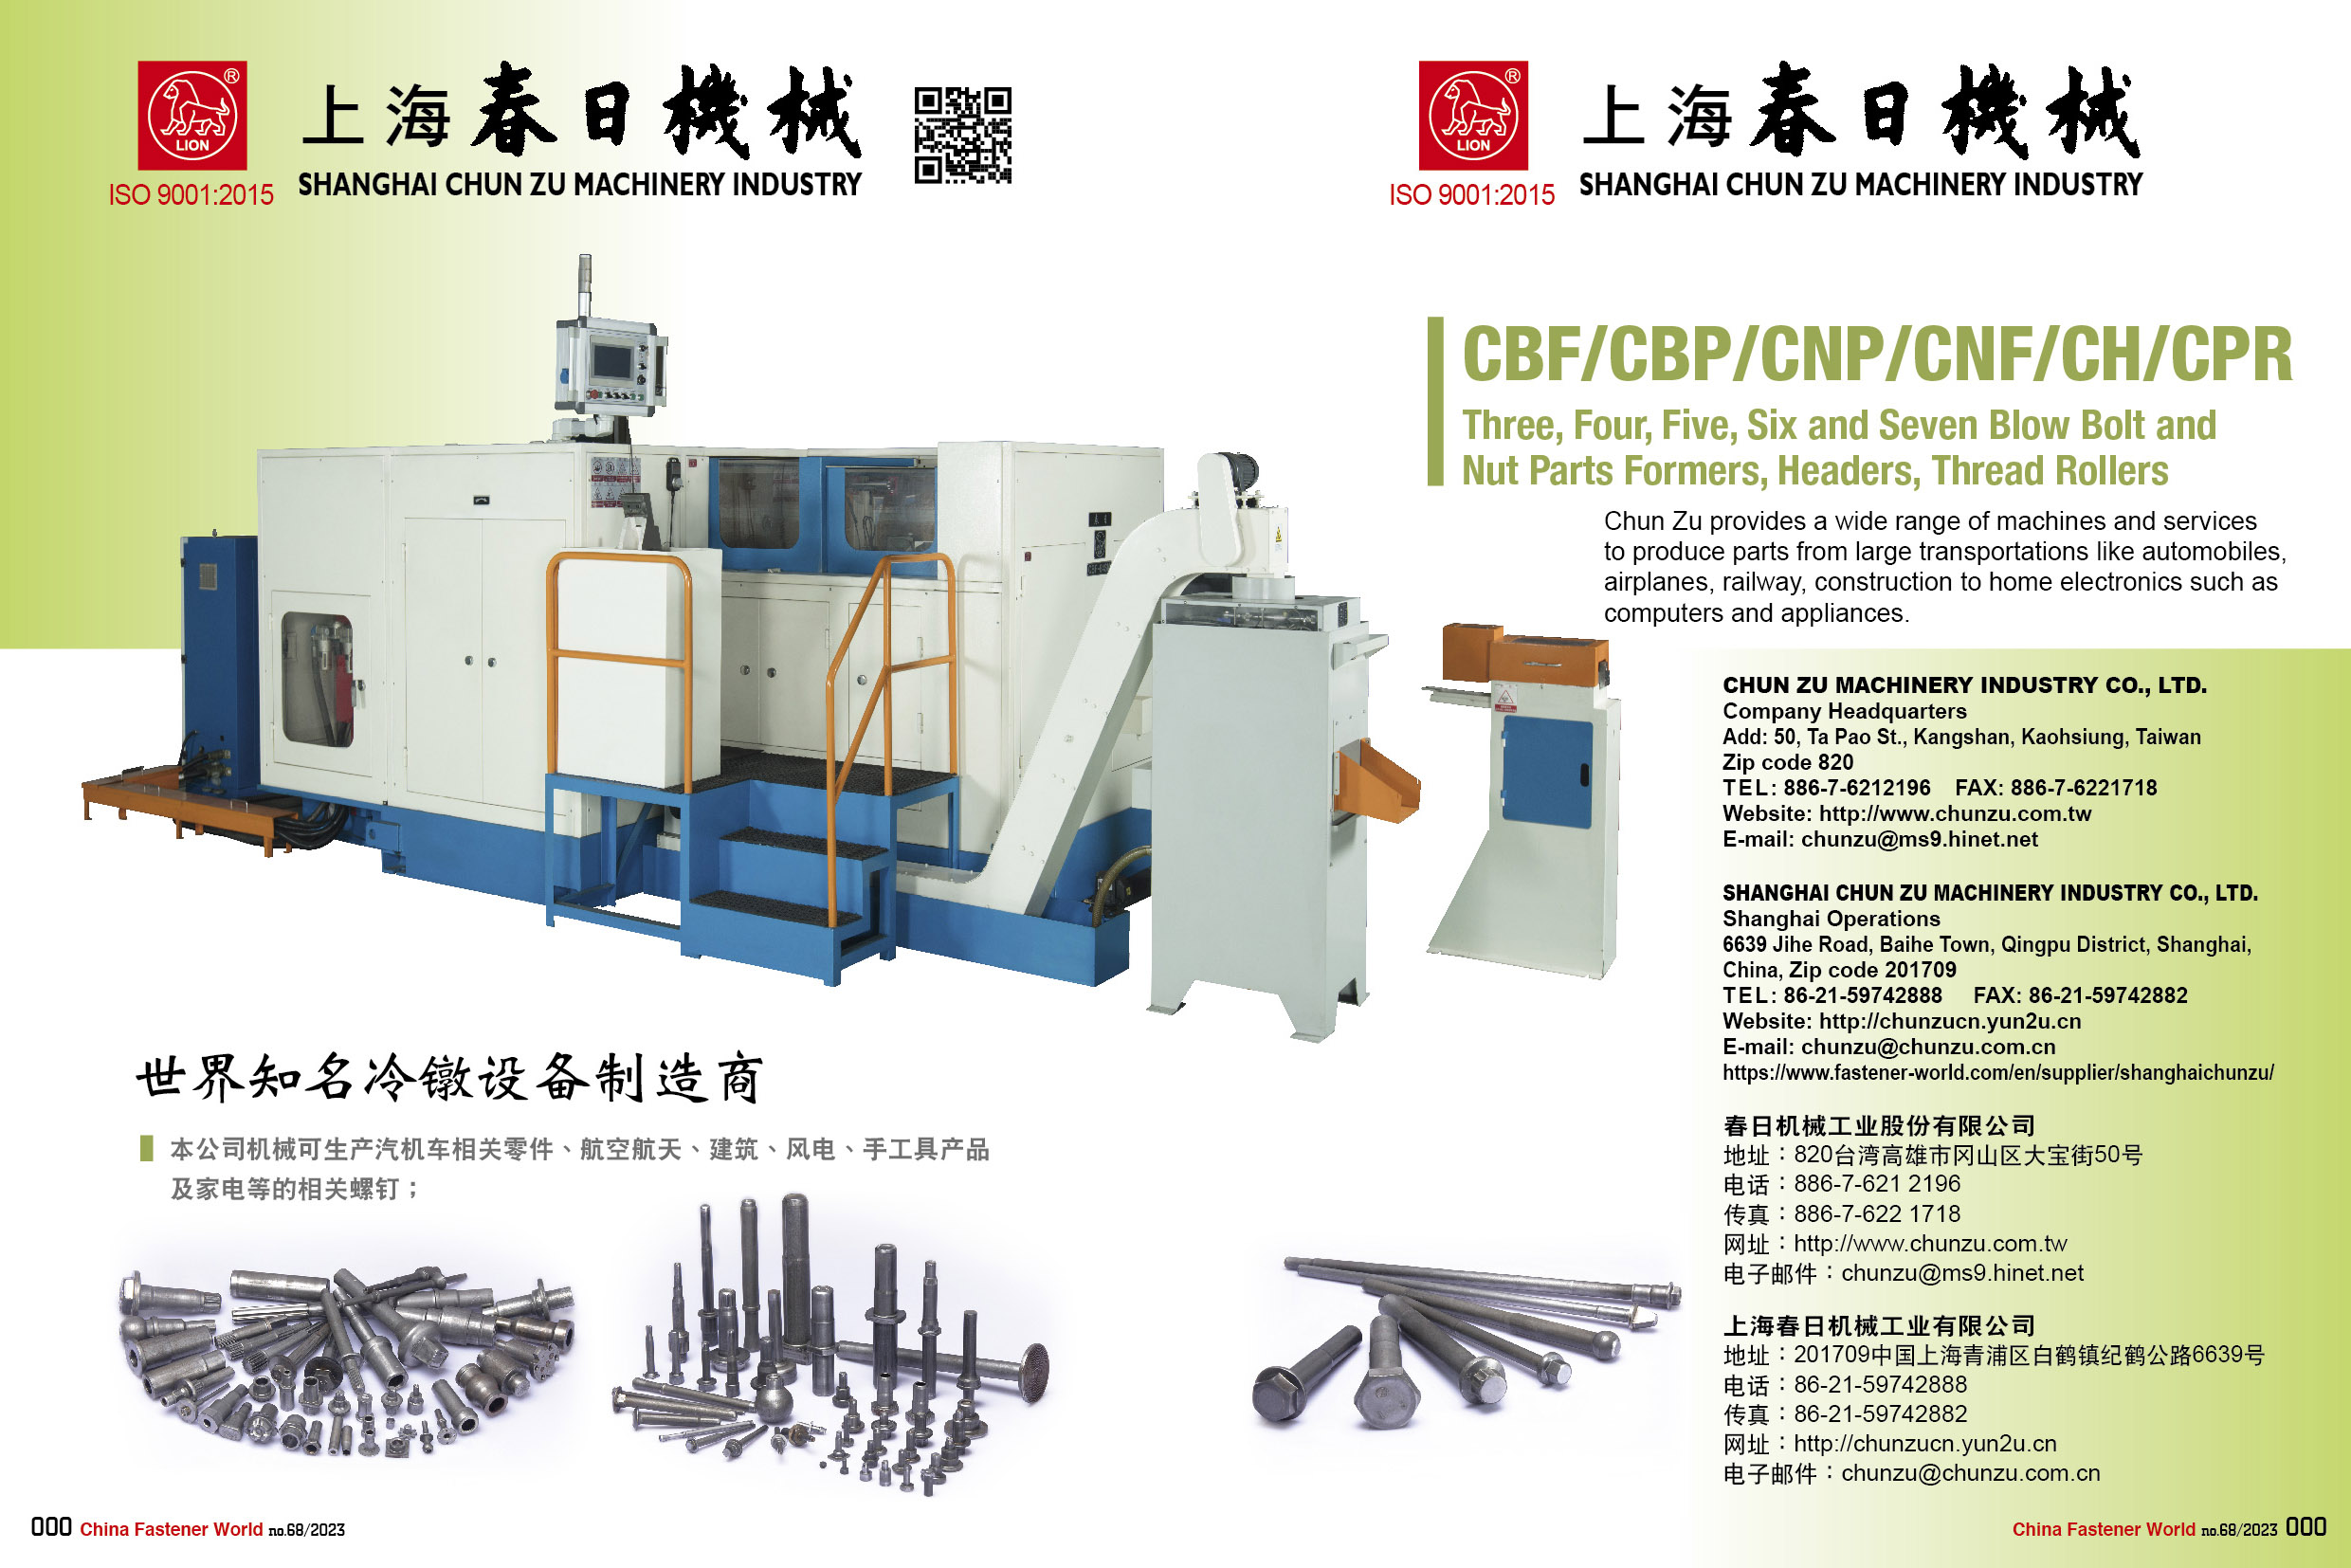 SHANGHAI CHUN ZU MACHINERY INDUSTRY CO.,LTD.